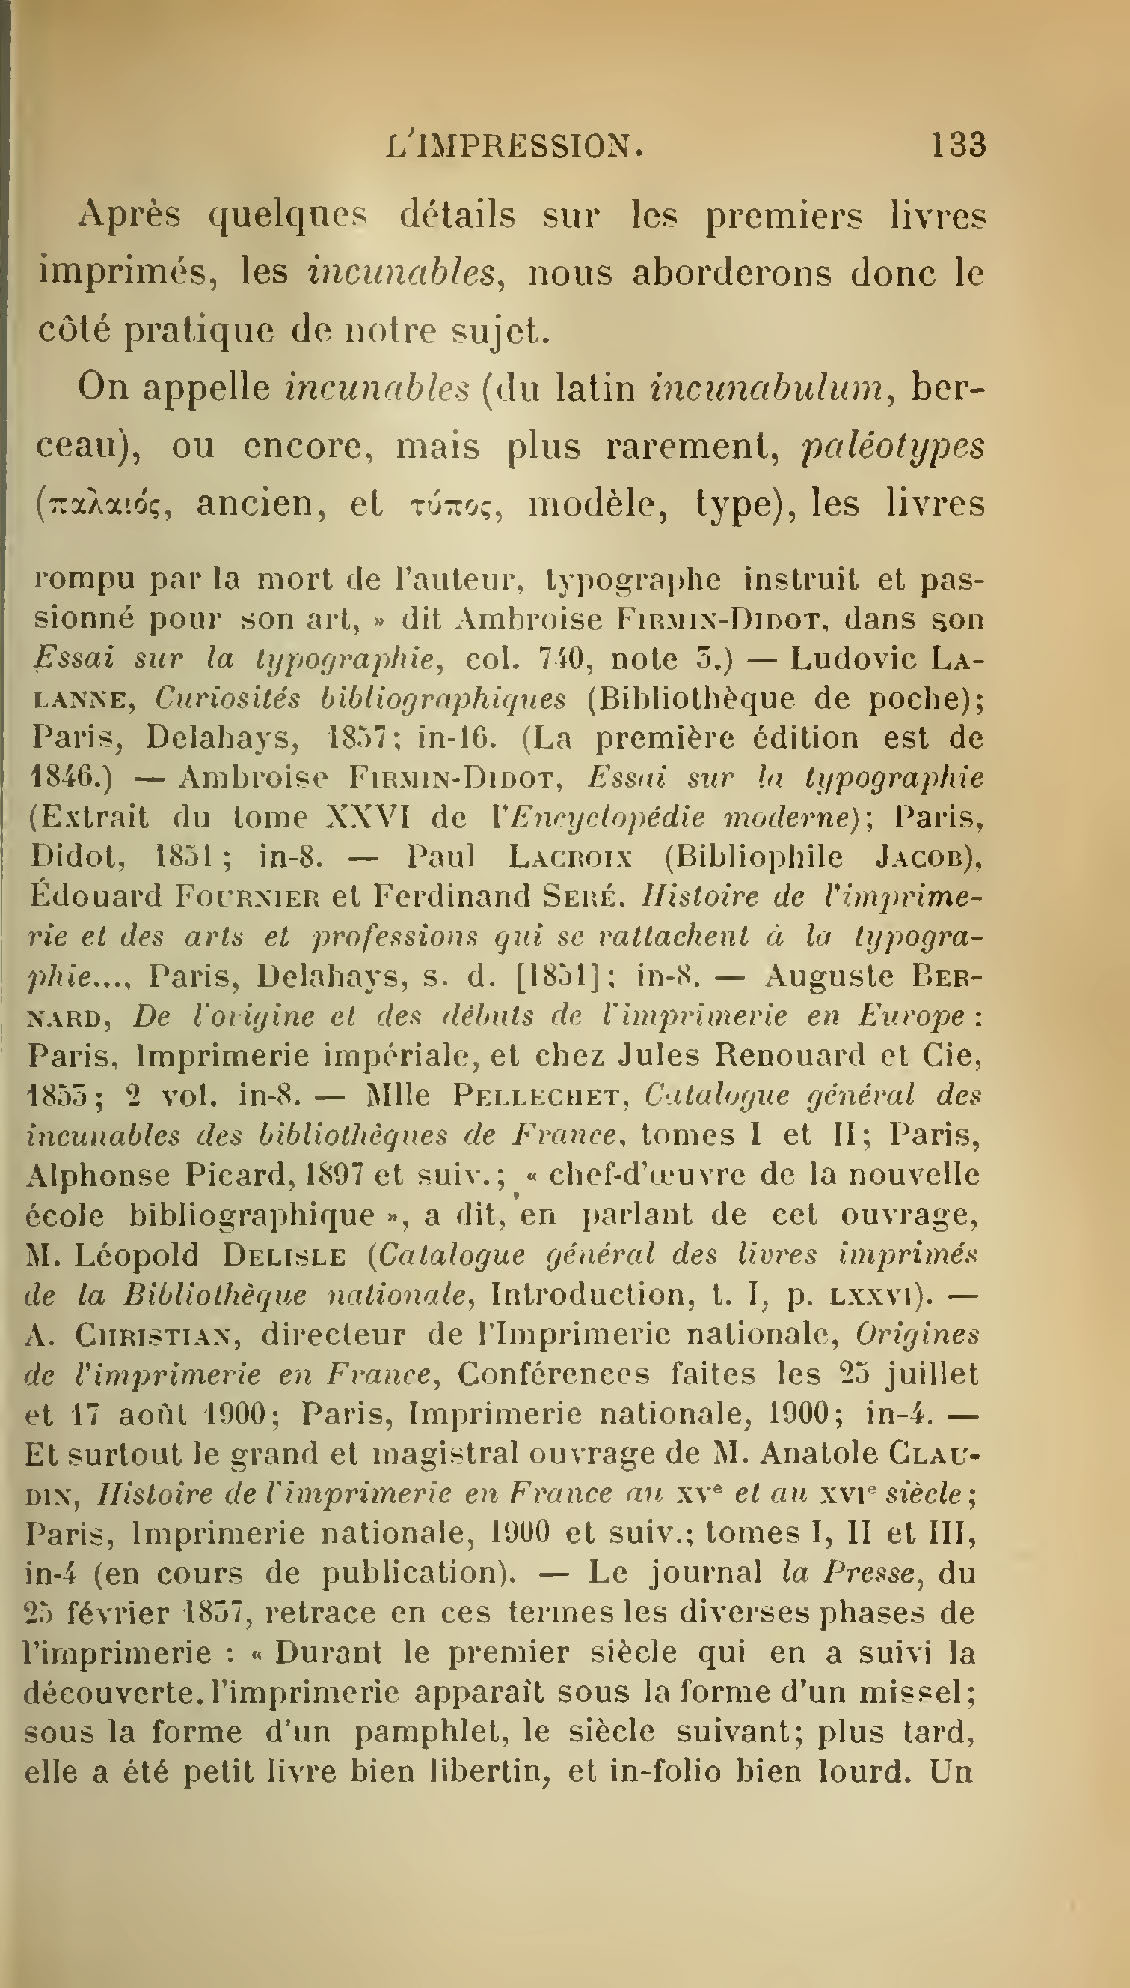 Albert Cim, Le Livre, t. III, p. 133.